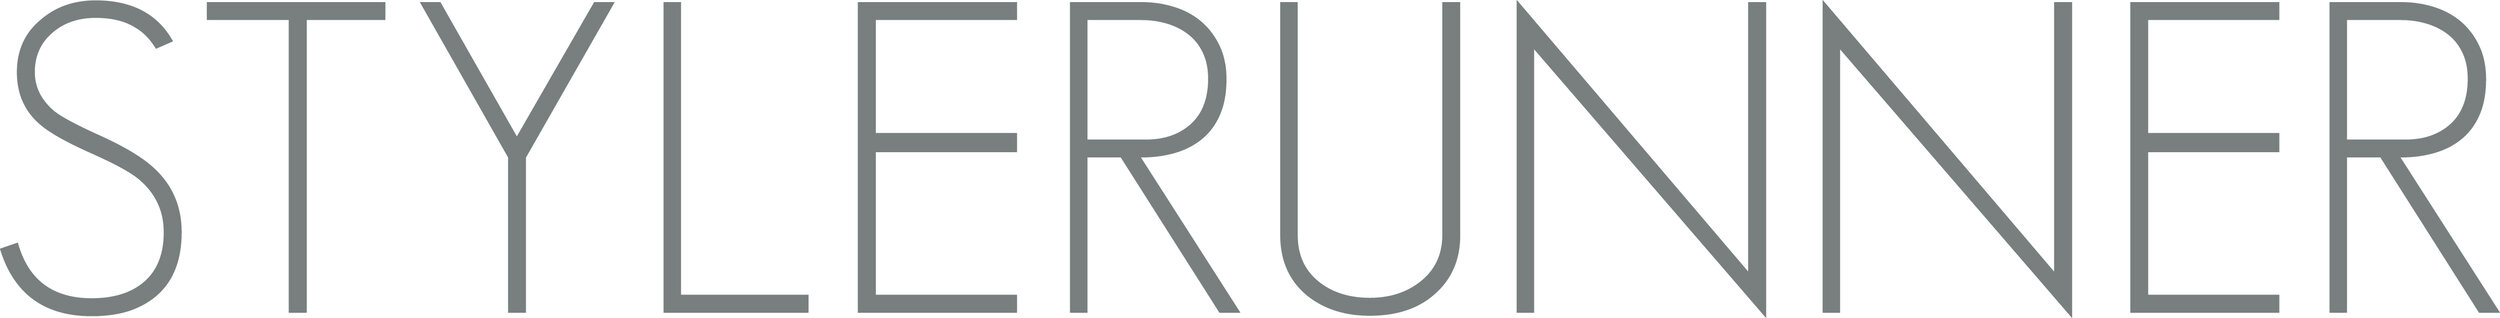 Logo-Stylerunner-Final_Grey.jpeg